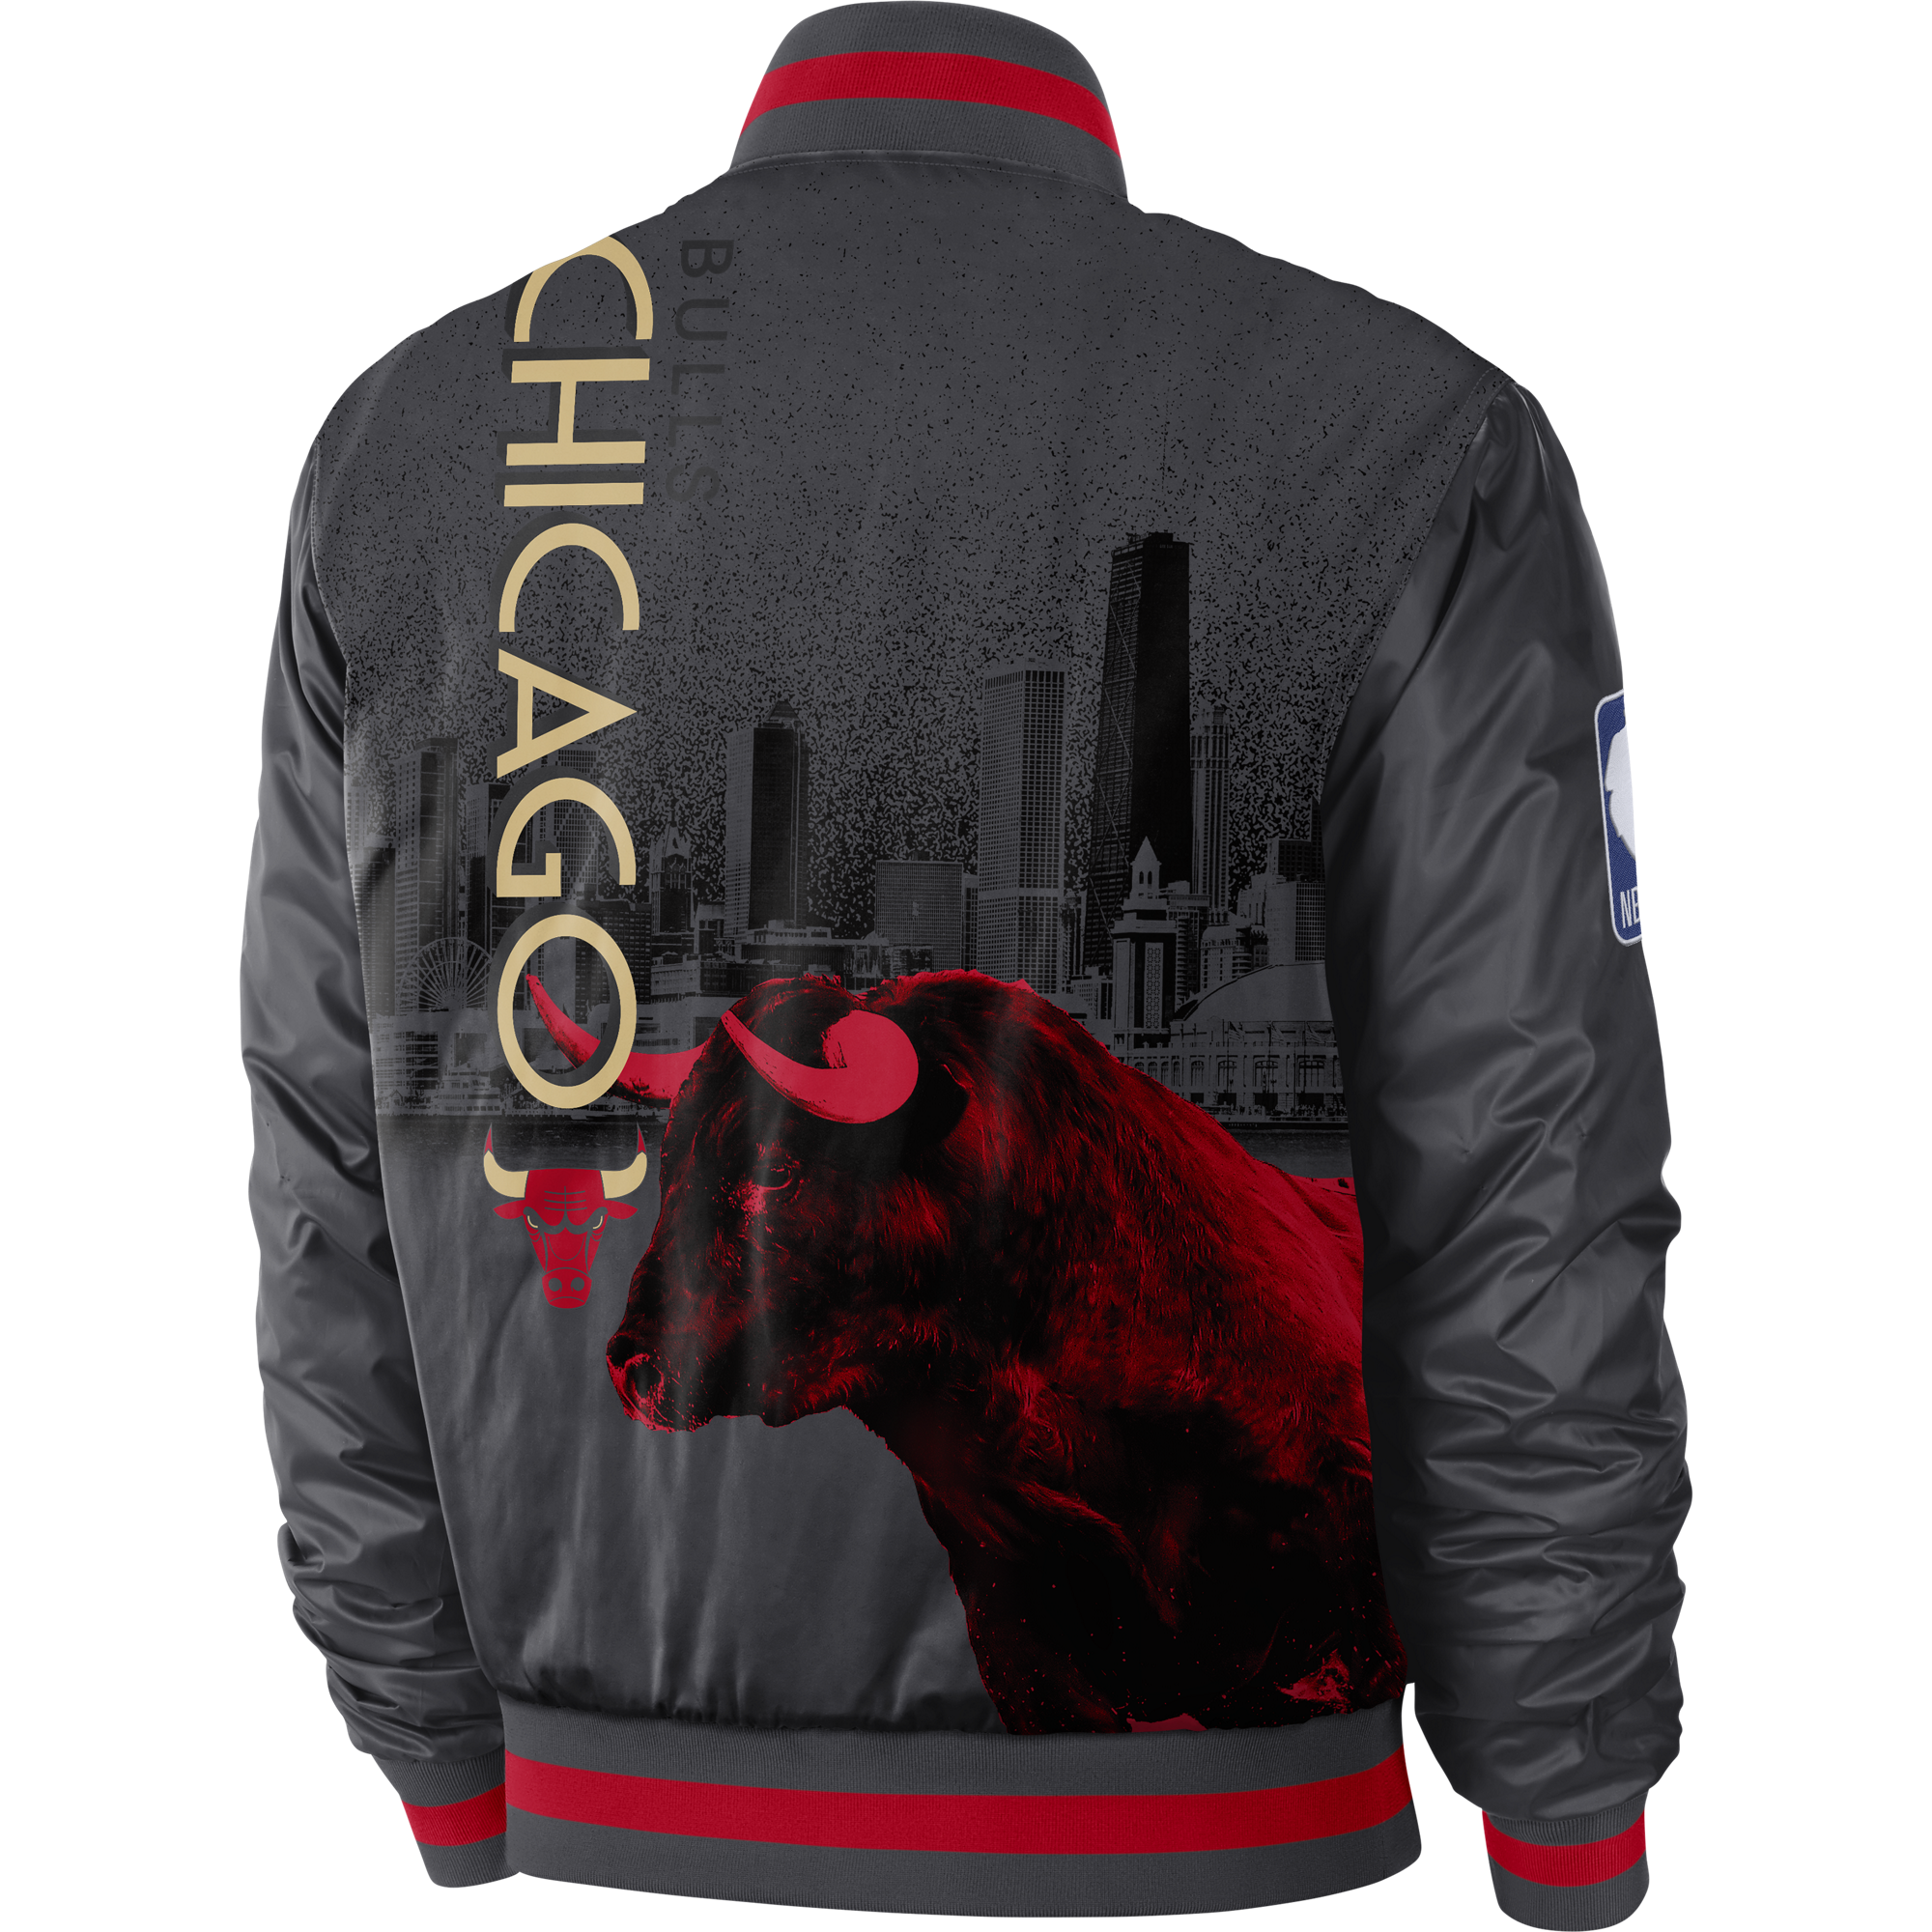 chicago bulls city edition jacket